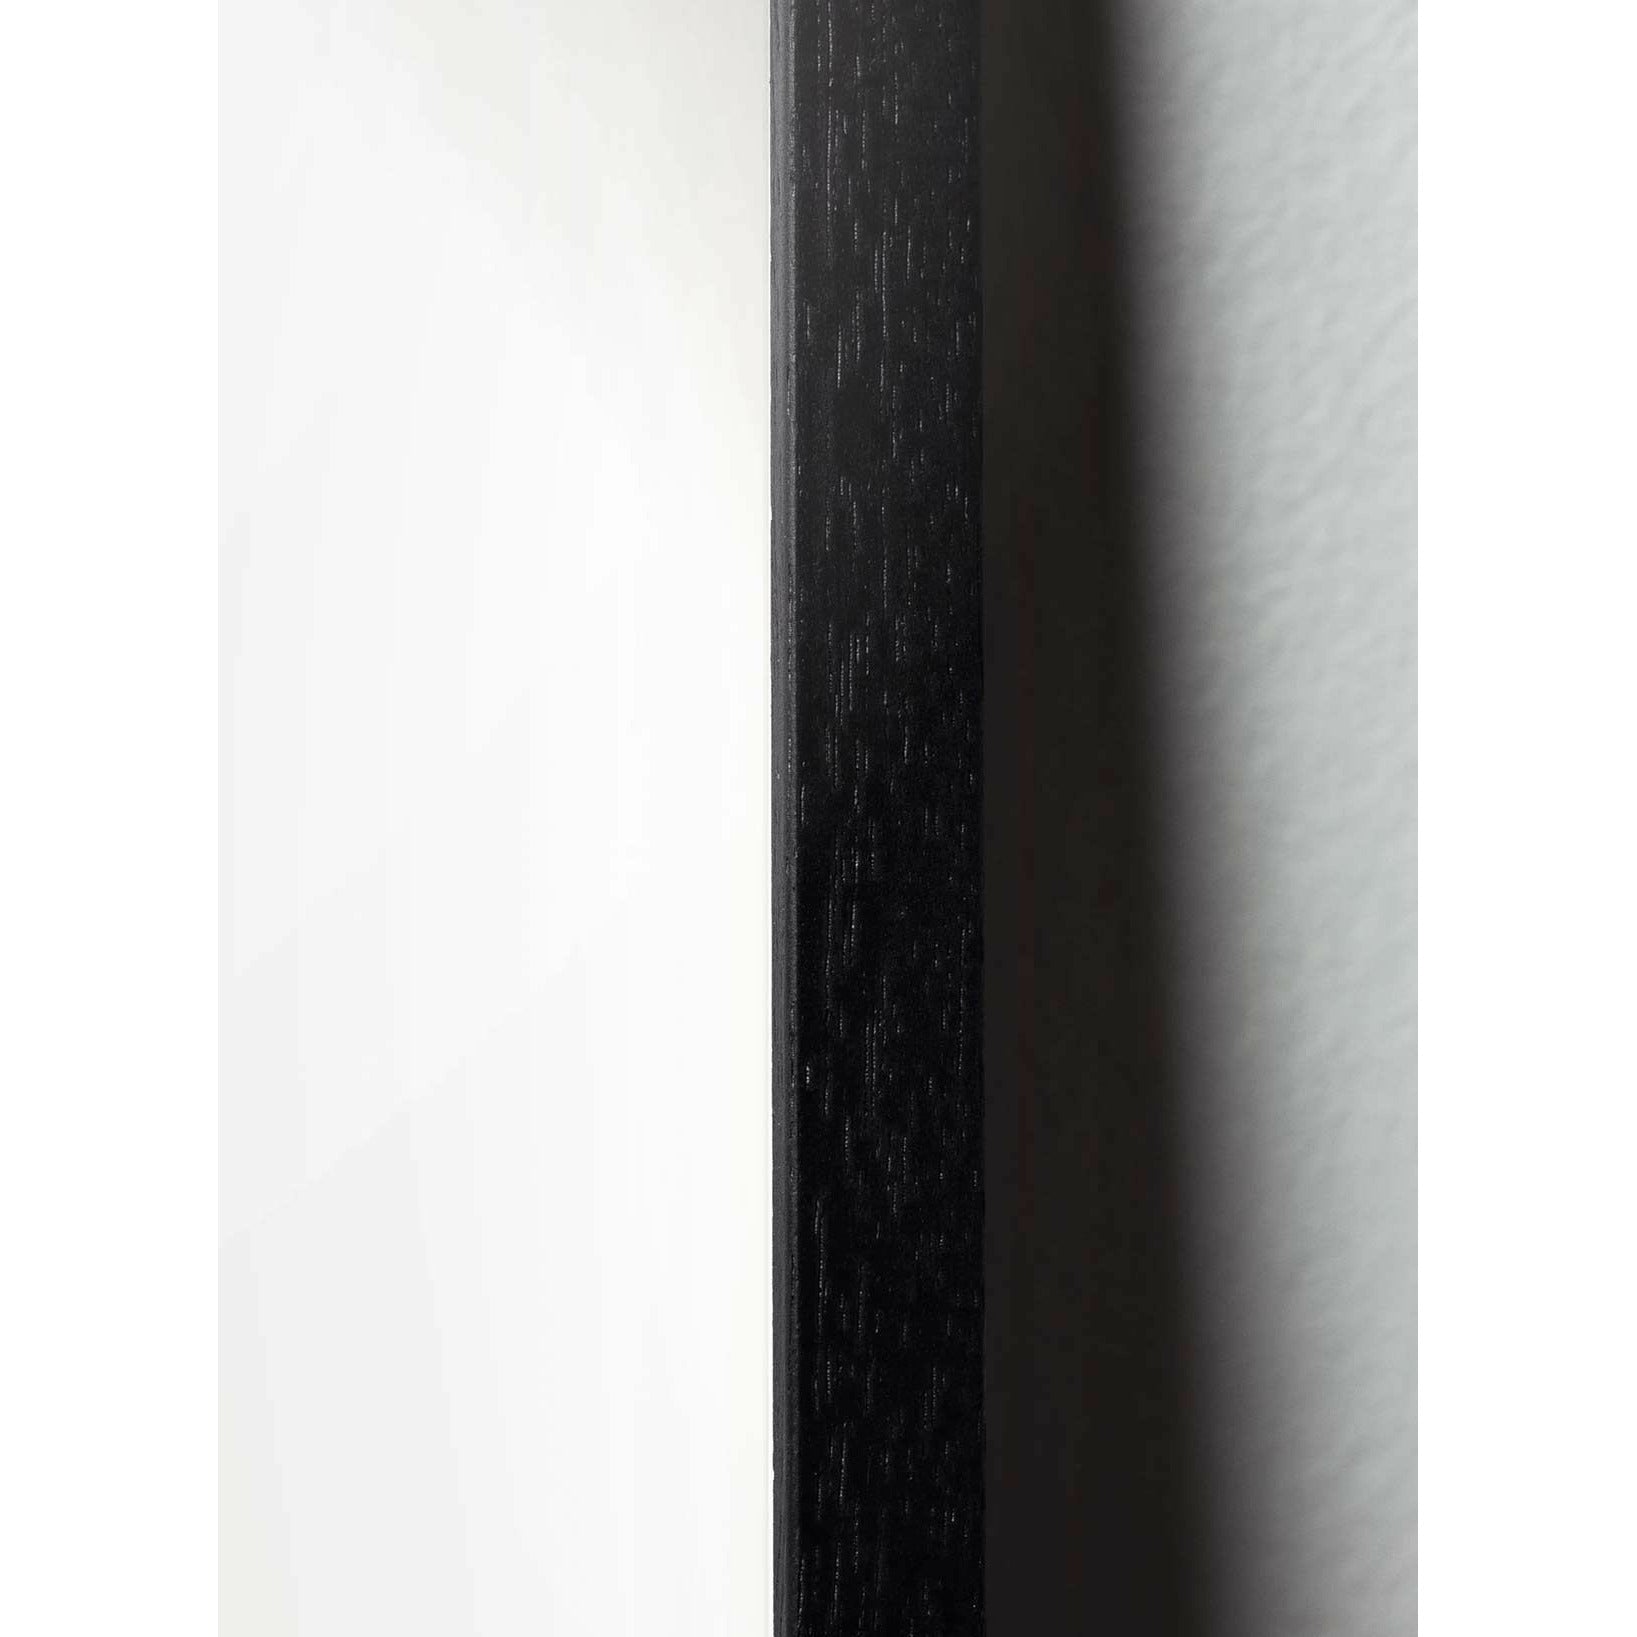 Brainchild Egg Figures Poster, Frame Made Of Black Lacquered Wood 70 X100 Cm, Black